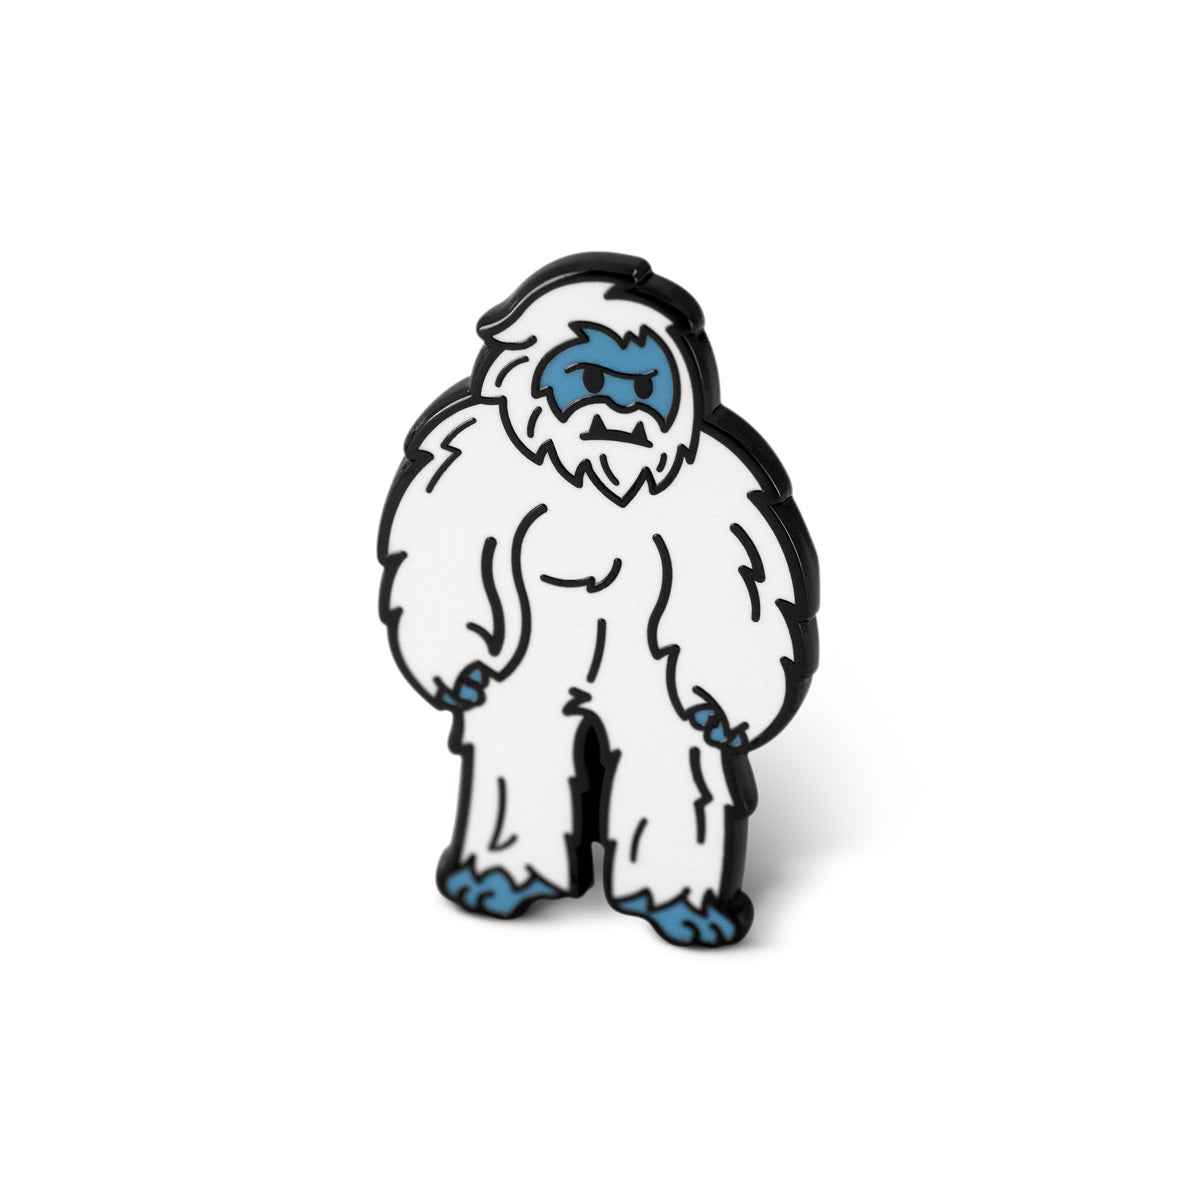 Yeti Grumpy Abominable Snowman Hard Enamel Lapel Pin